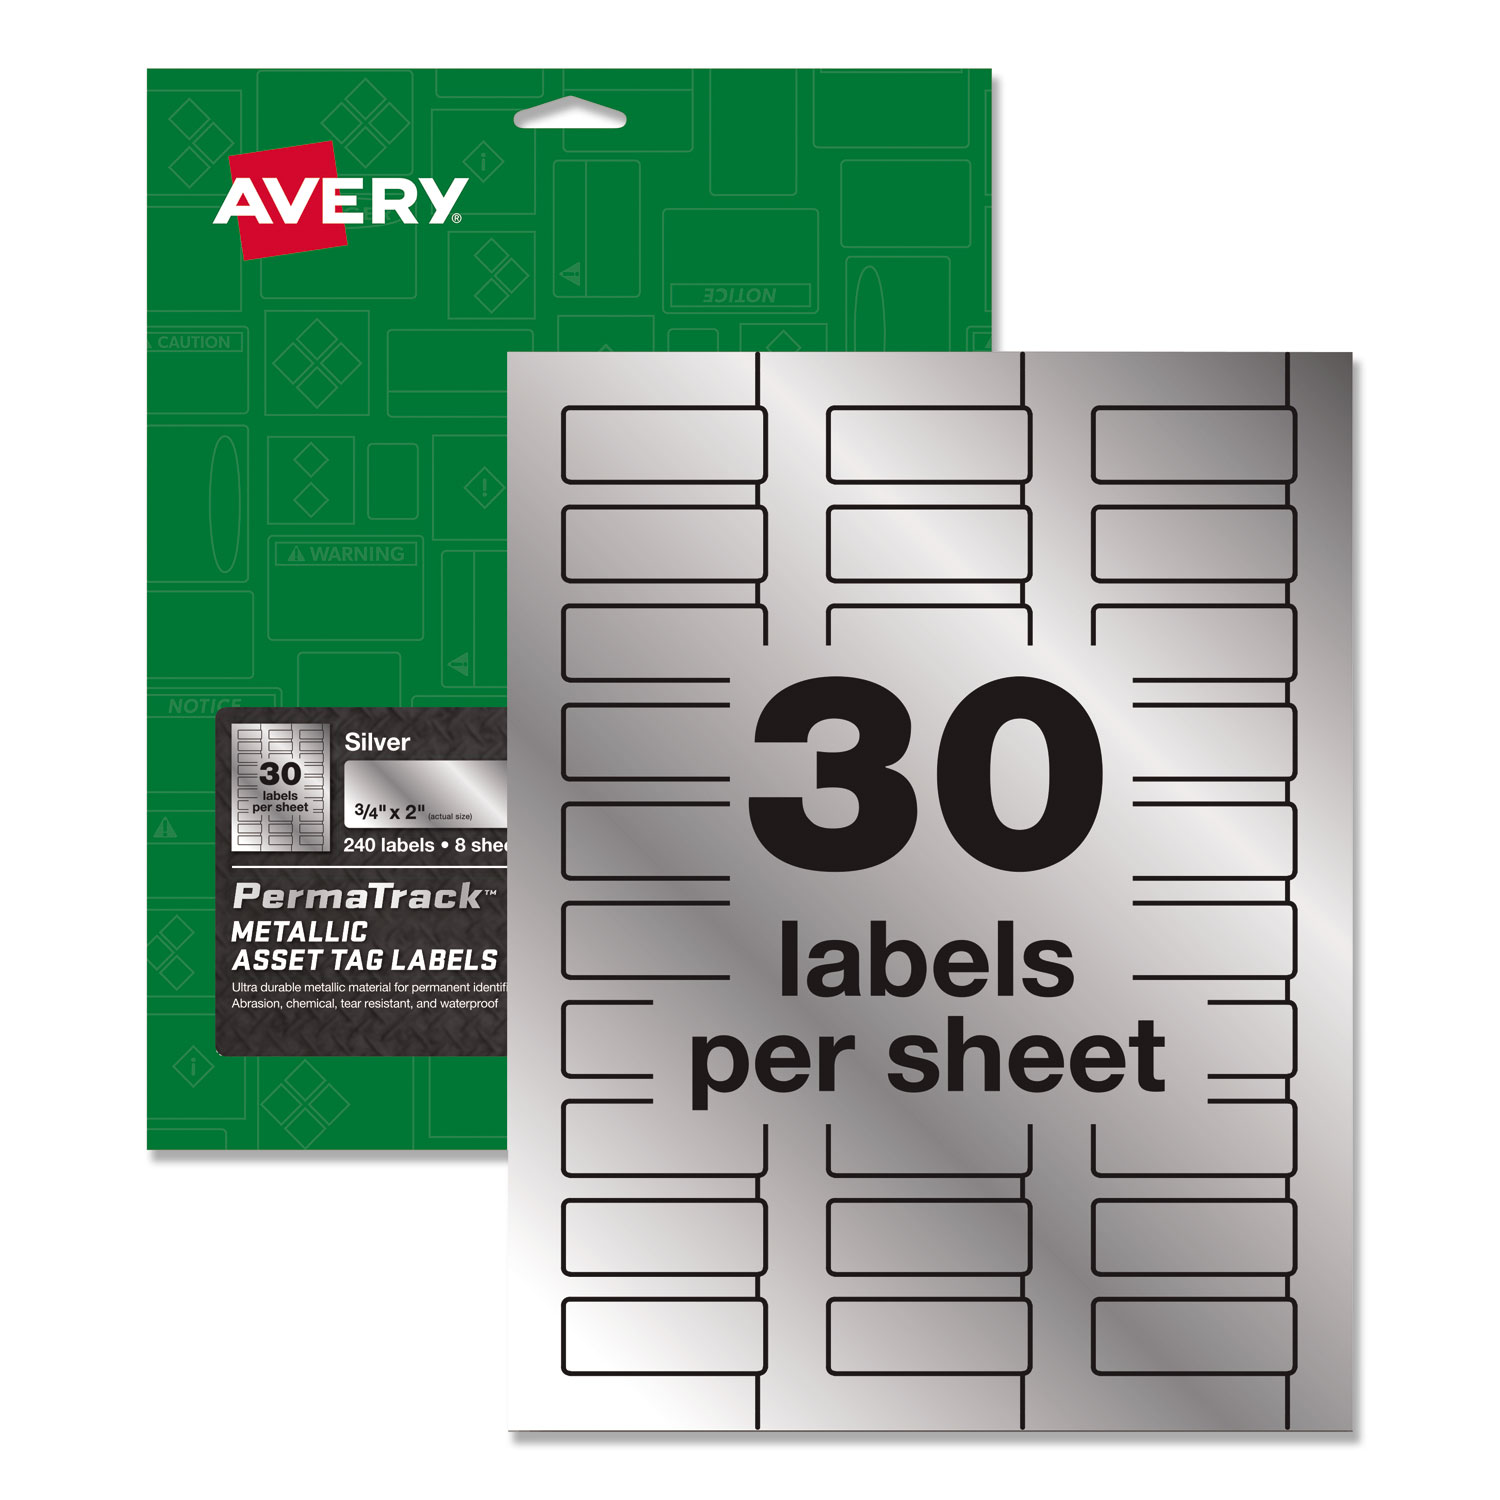  Avery 61524 PermaTrack Metallic Asset Tag Labels, Laser Printers, 0.75 x 2, Metallic Silver, 30/Sheet, 8 Sheets/Pack (AVE61524) 